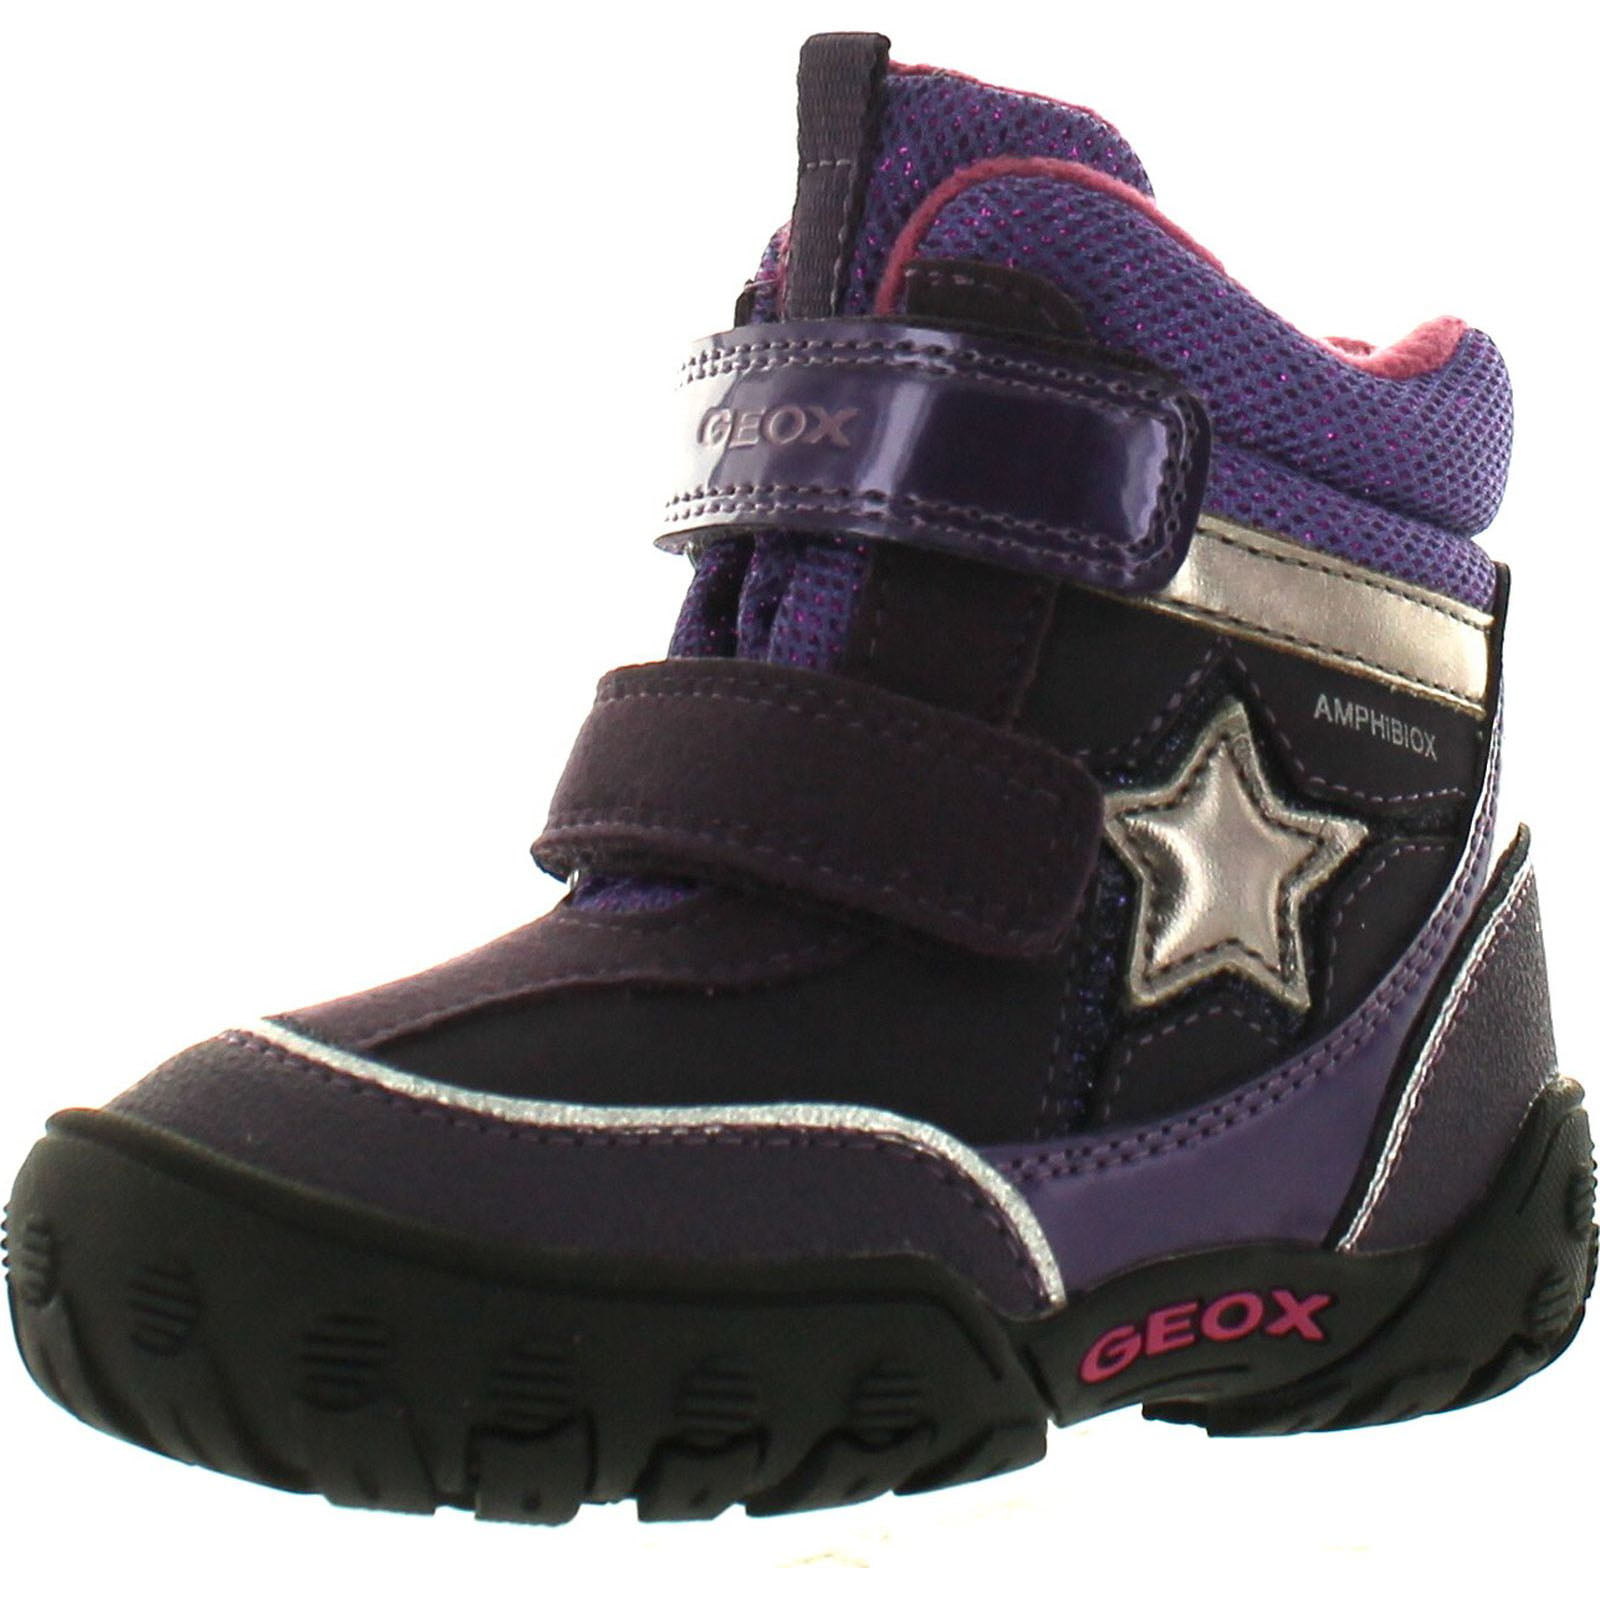 Geox Girls Gulp Cute Fashion Waterproof Winter Boots, Dark Grey, -